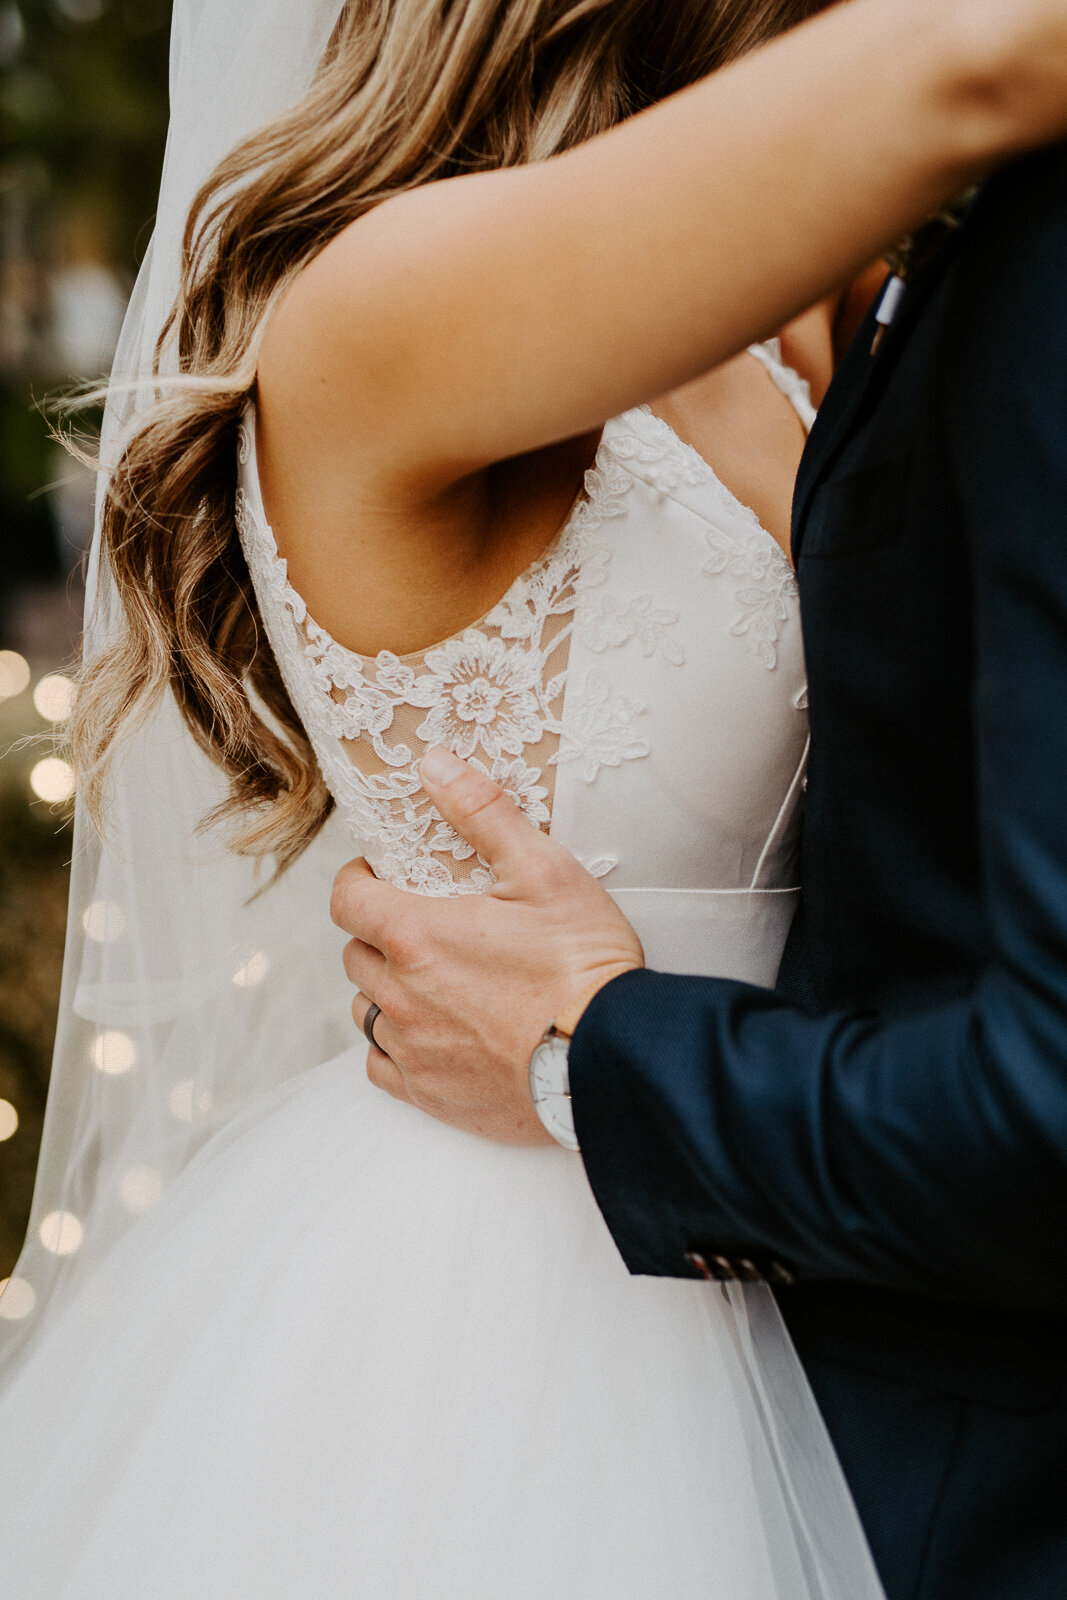 My Top 10 Wedding Registry Picks - Stefany Bare Blog